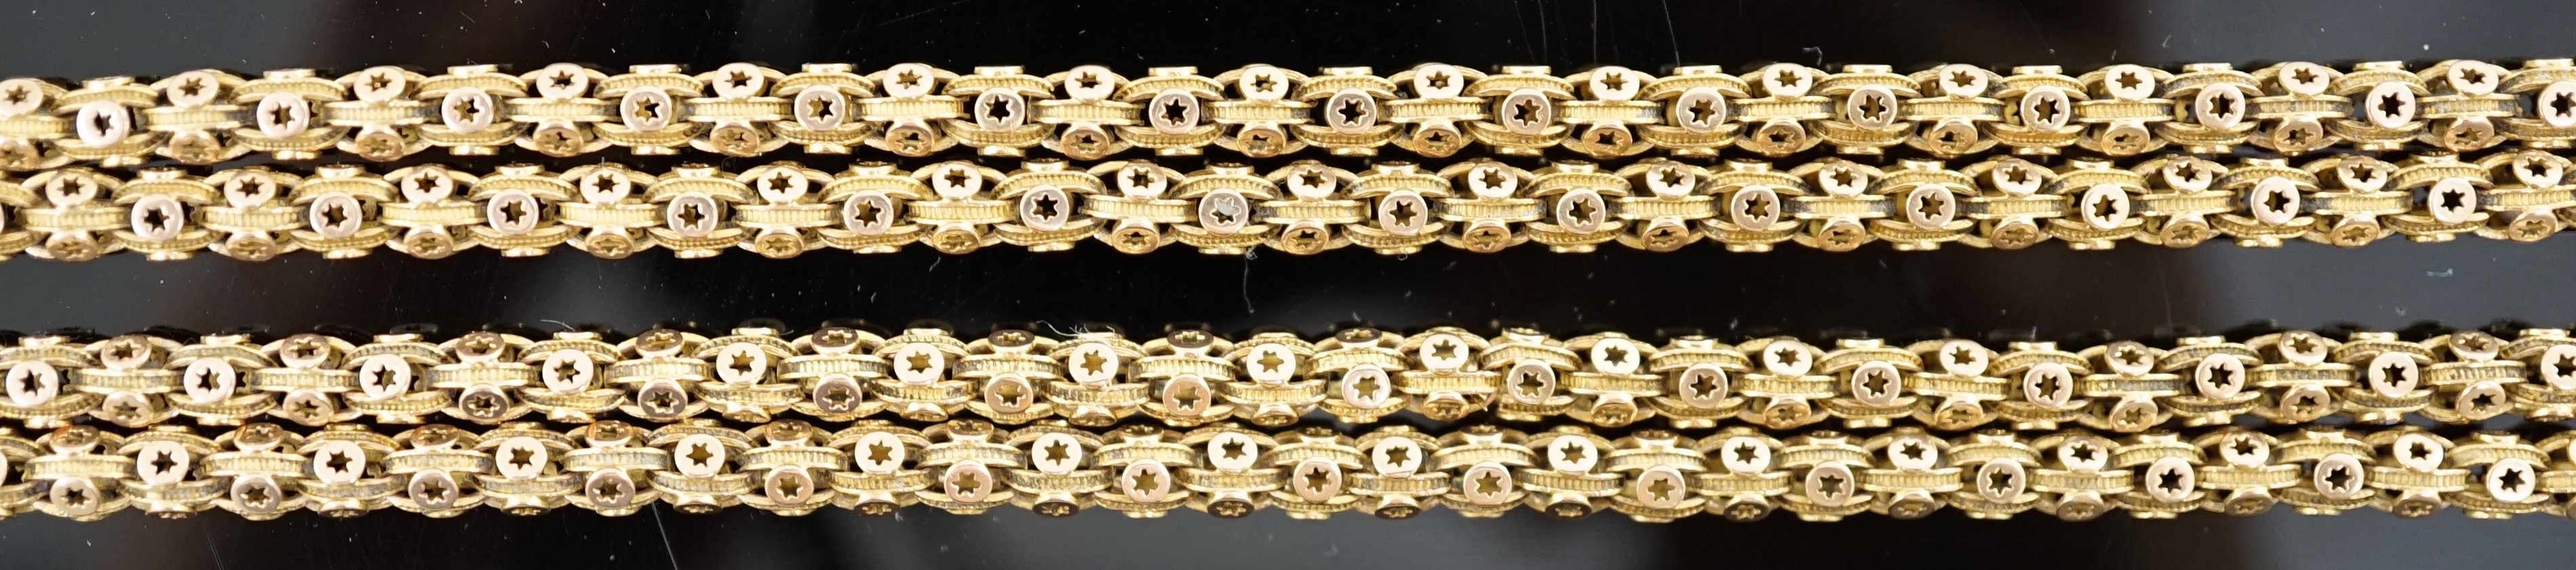 A 19th century gold guard chain                                                                                                                                                                                             